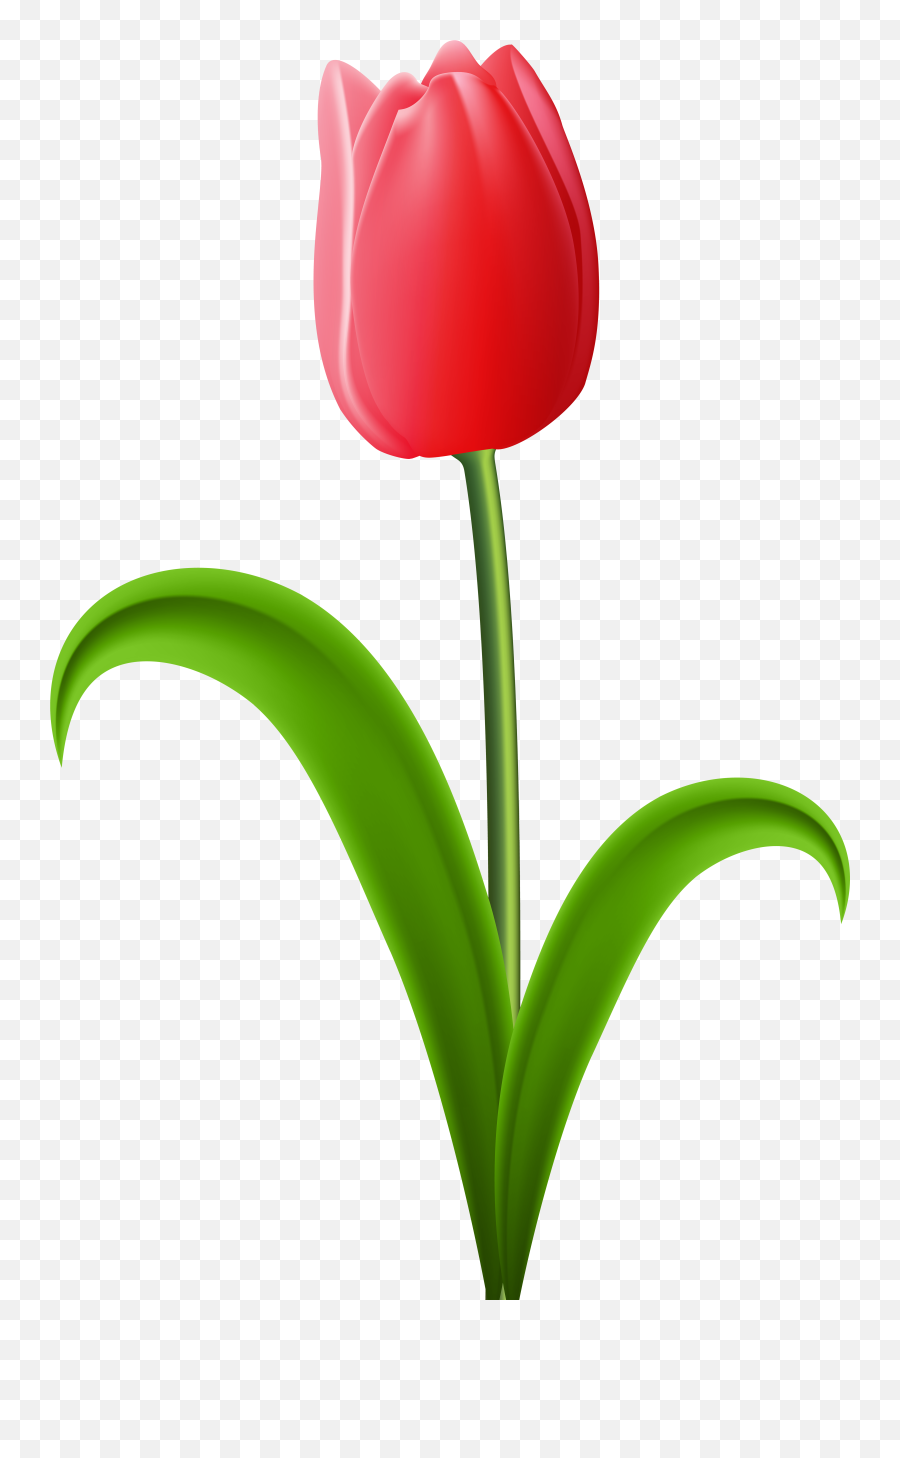 Red Transparent Png Clip - Tulip Clipart Transparent Tulip Clipart Transparent Background,Clipart With Transparent Background